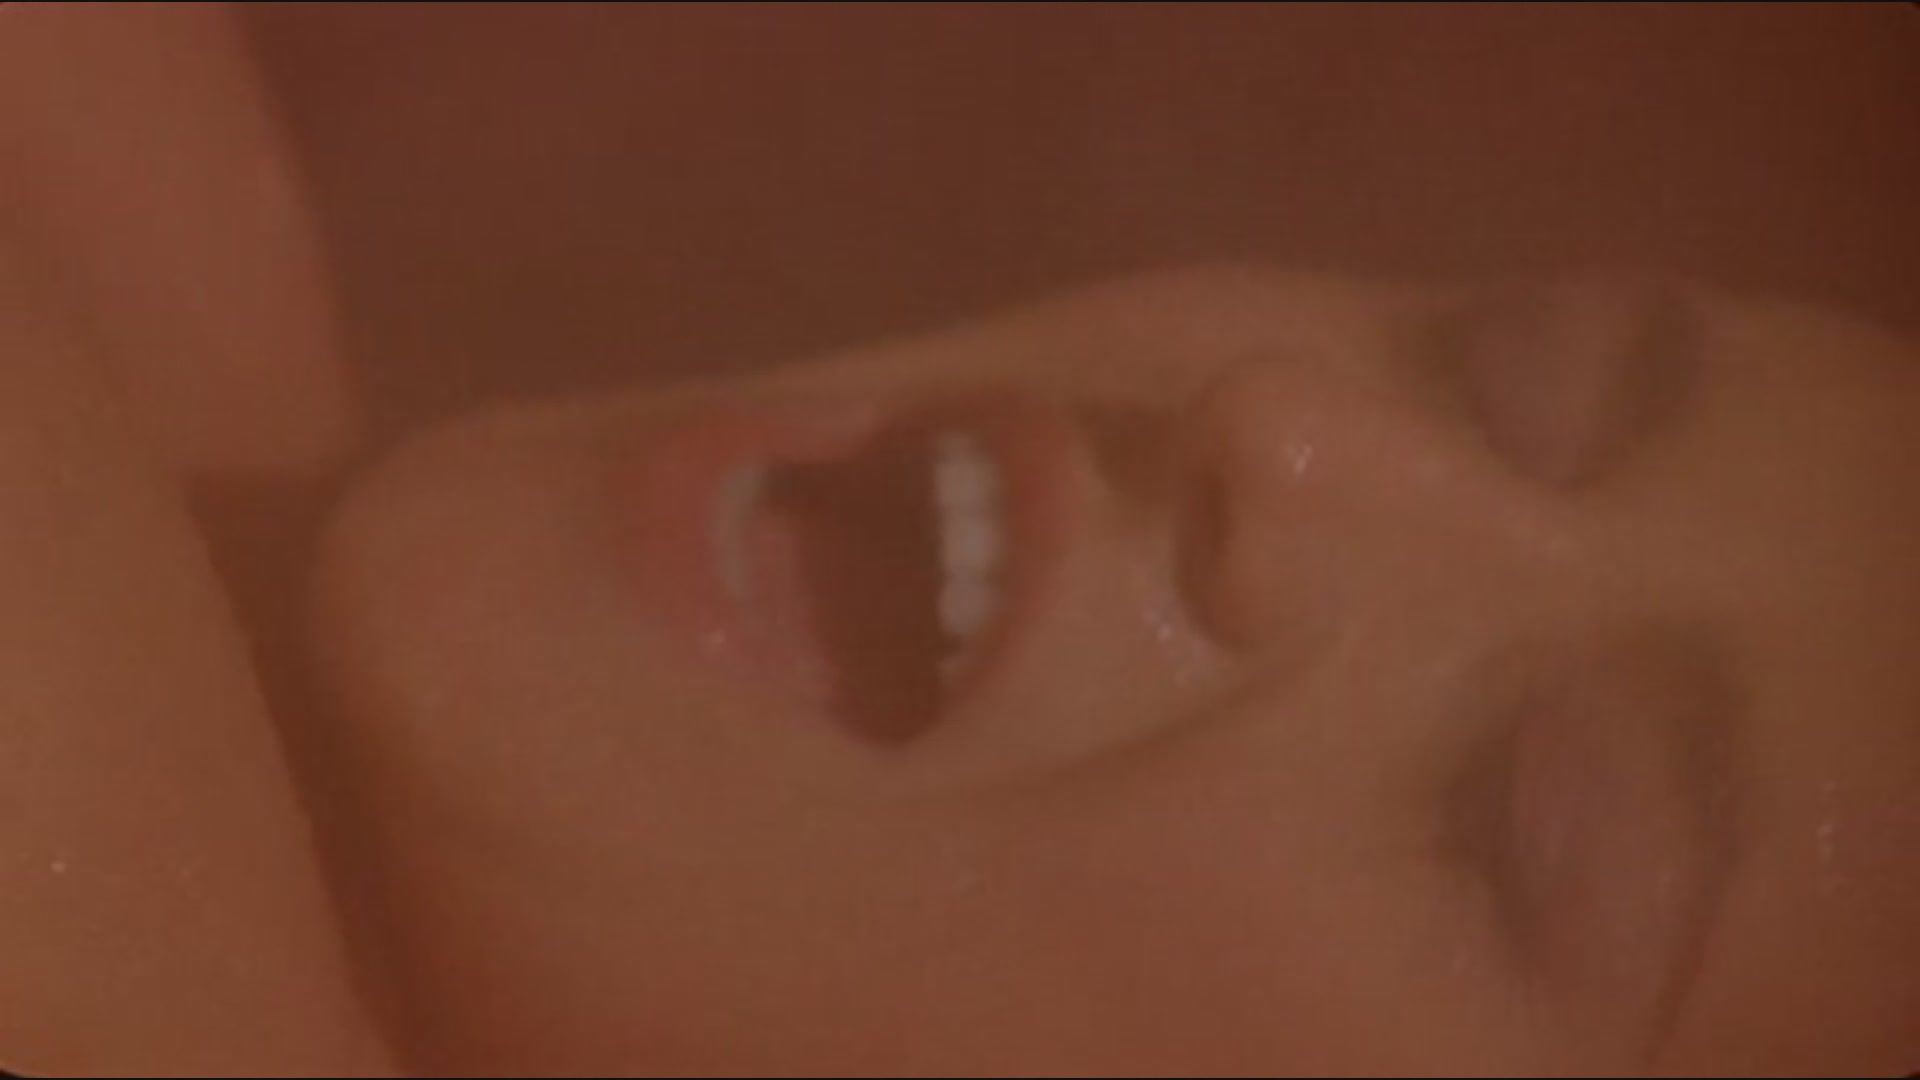 LustShows Silvia Rossi sex scene in sauna from the movie "Fallo" Hot Women Having Sex